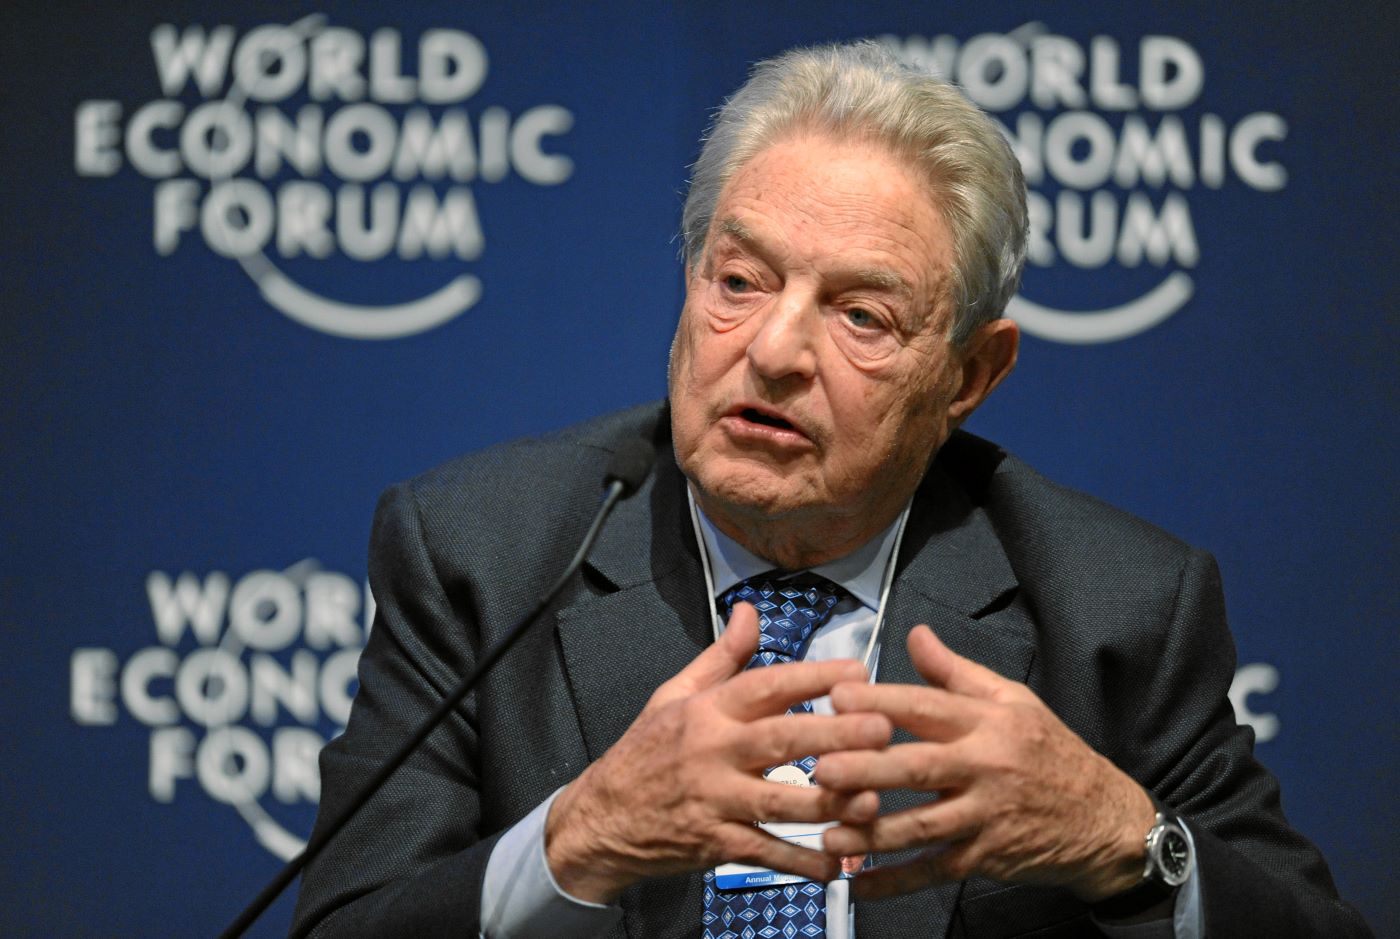 George_Soros-World_Economic_Forum_Annual_Meeting_2011.jpg Autor: Michael Wuertenberg | Crédito: swiss-image.ch Derechos de autor: World Economic Forum/swiss-image.ch